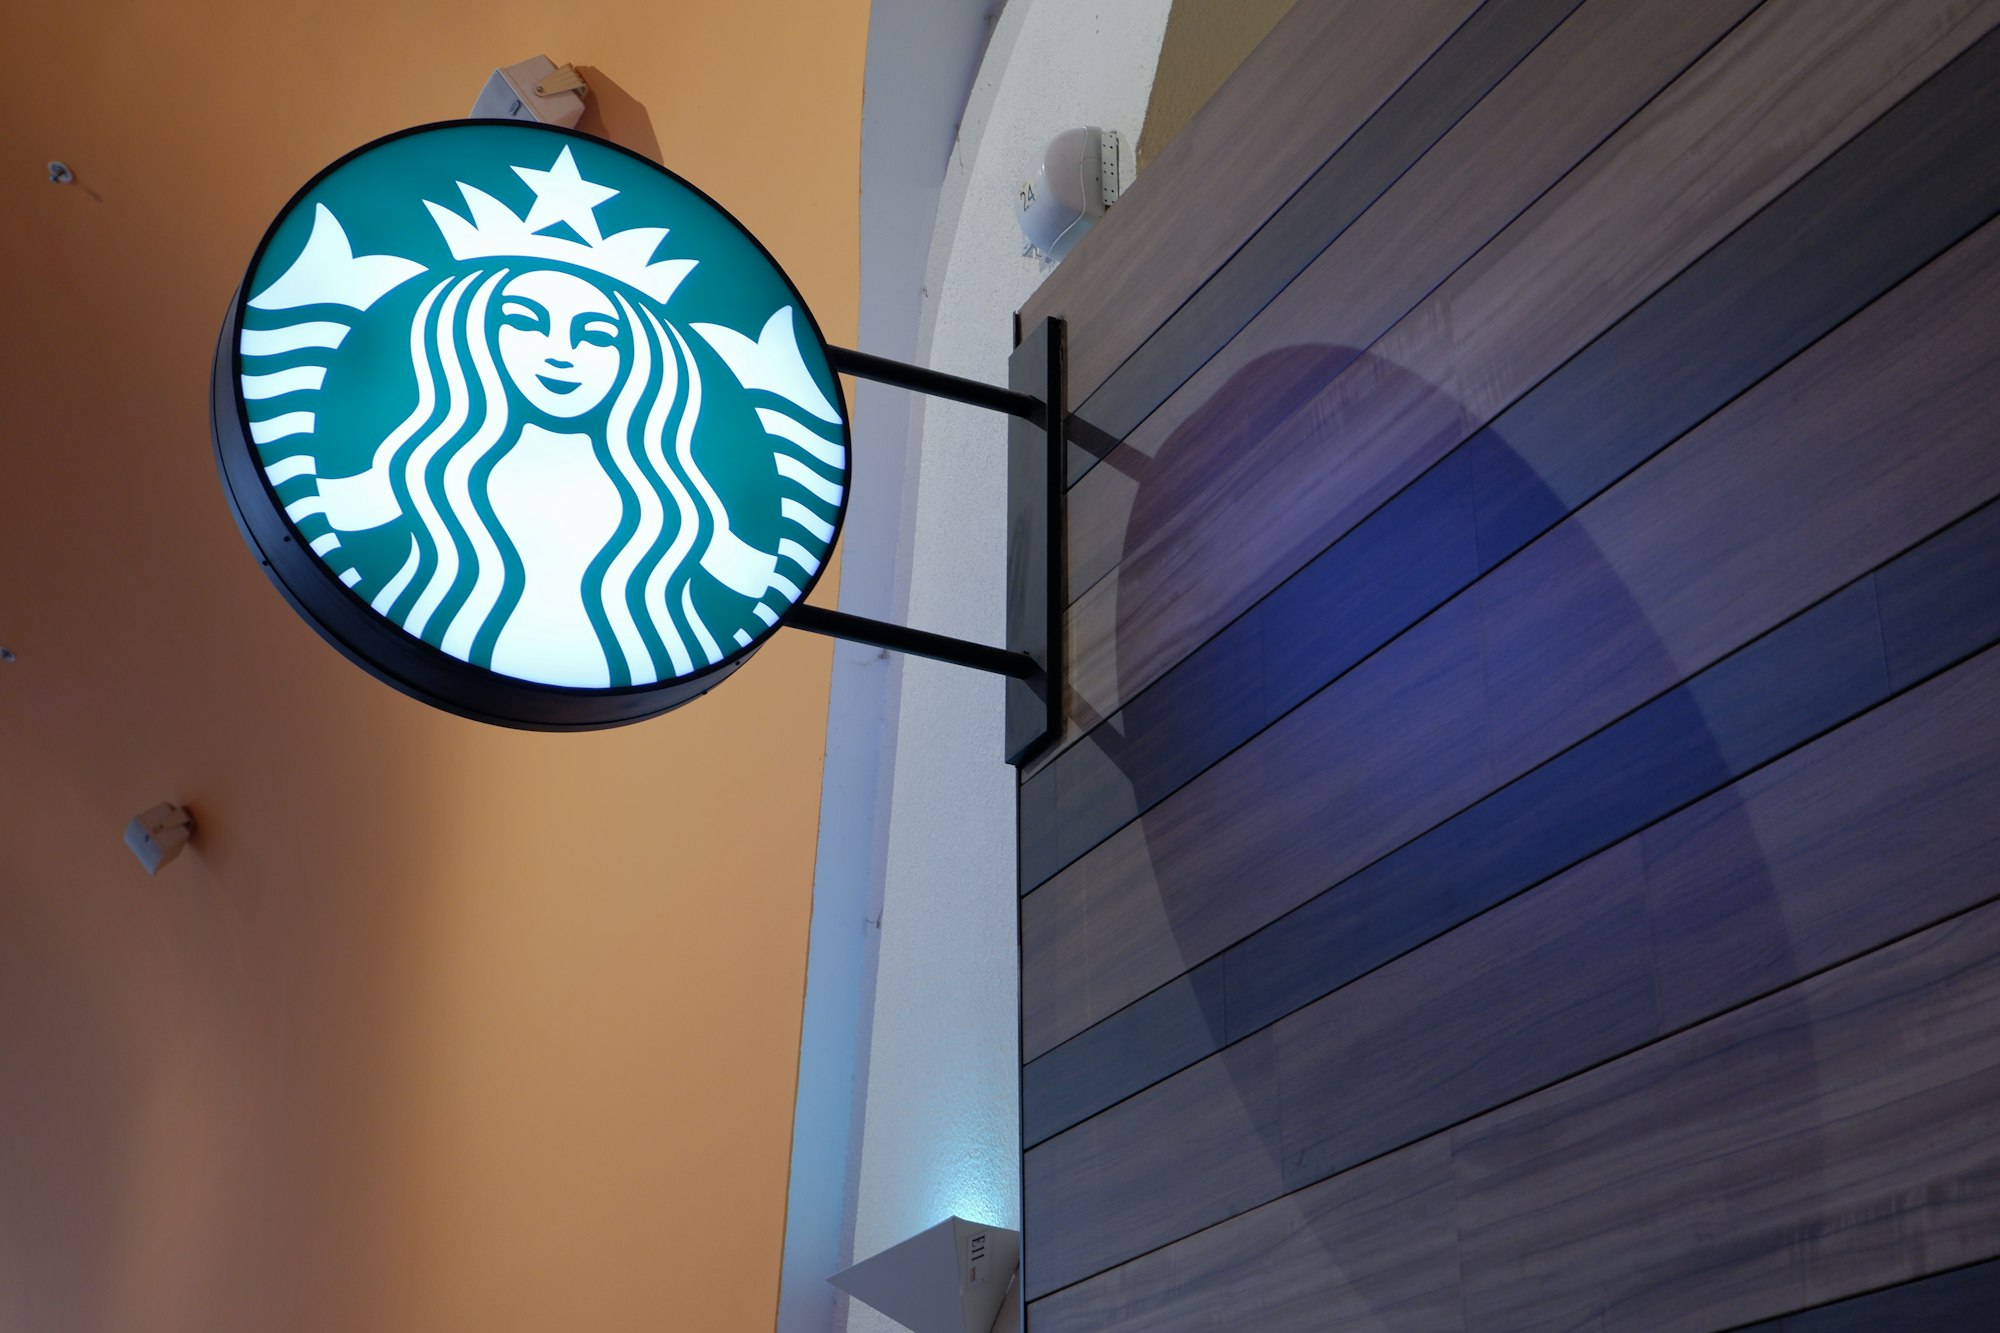 Shanghai recovers: Starbucks opens doors after quarantine